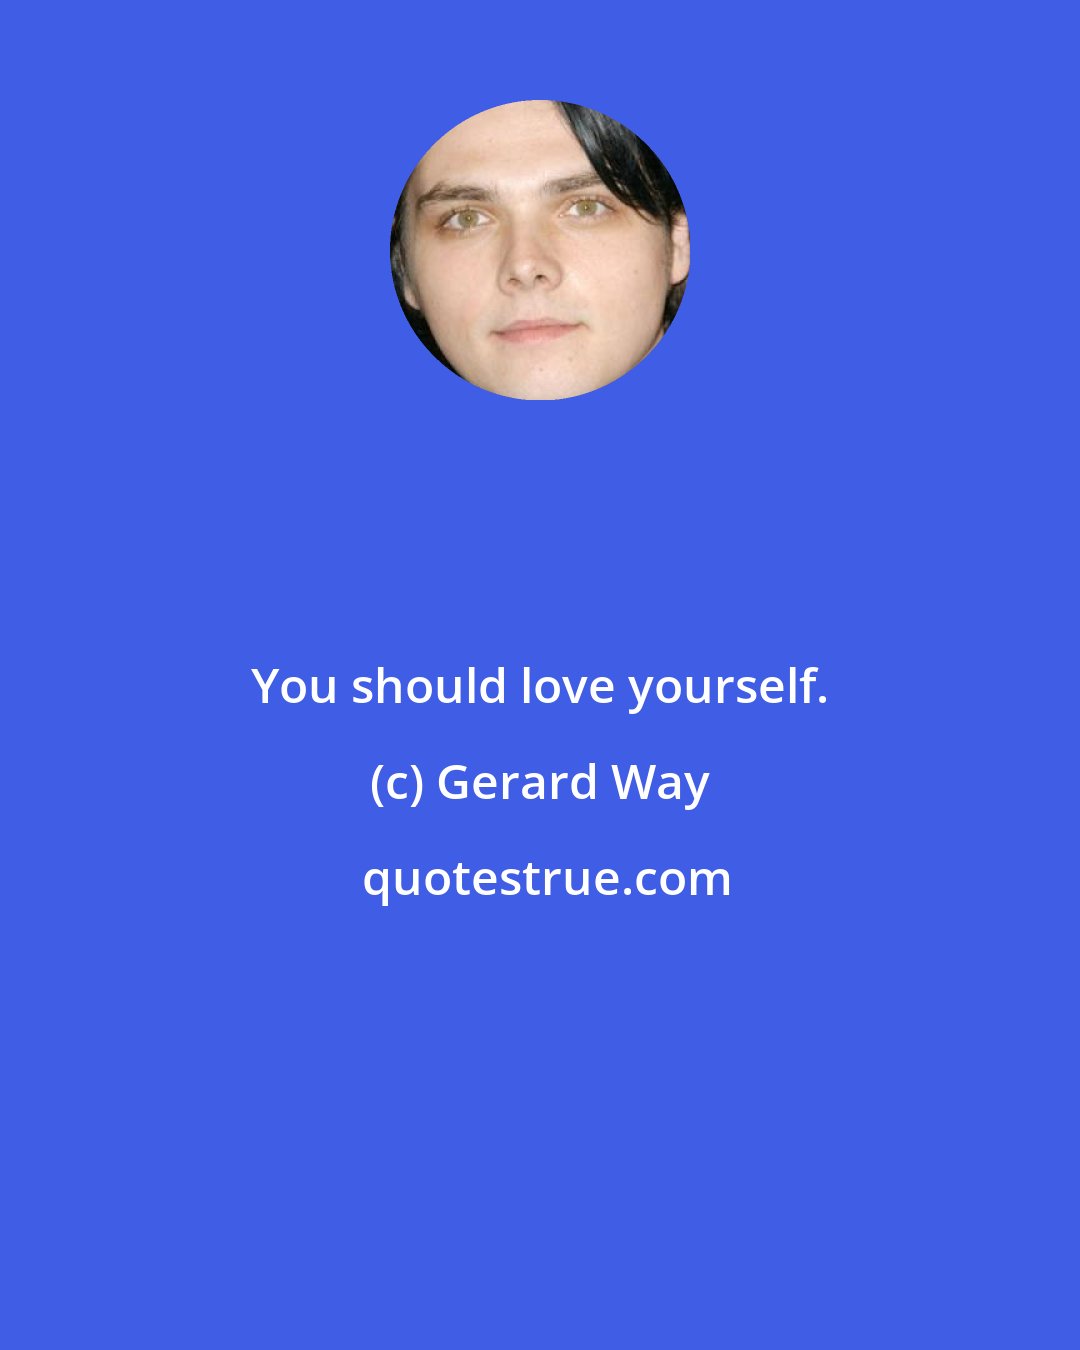 Gerard Way: You should love yourself.